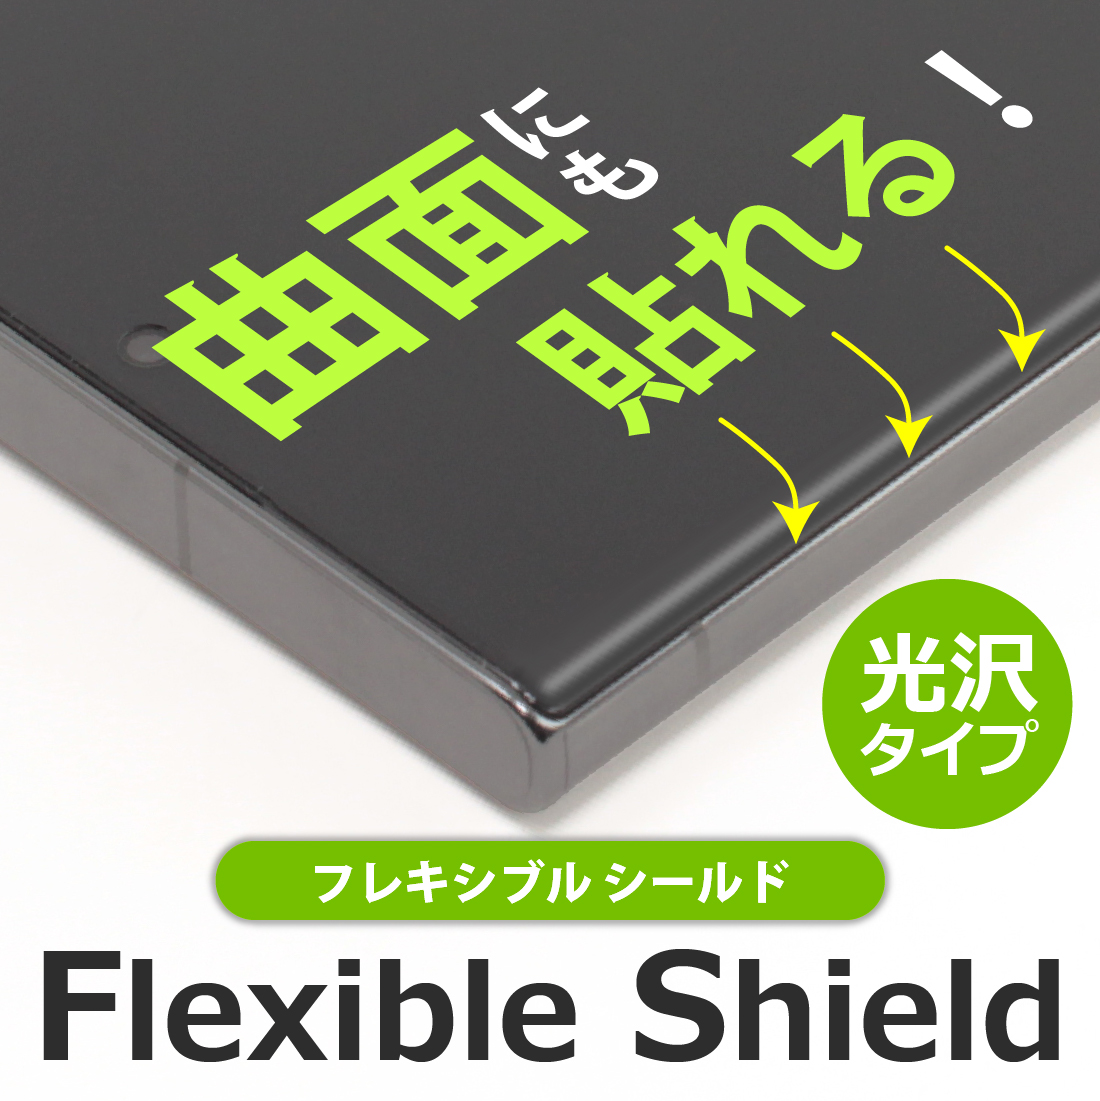 BLANCPAIN X SWATCH BIOCERAMIC SCUBA FIFTY FATHOMS 対応 Flexible Shield[光沢] 保護 フィルム [風防用] 曲面対応 日本製